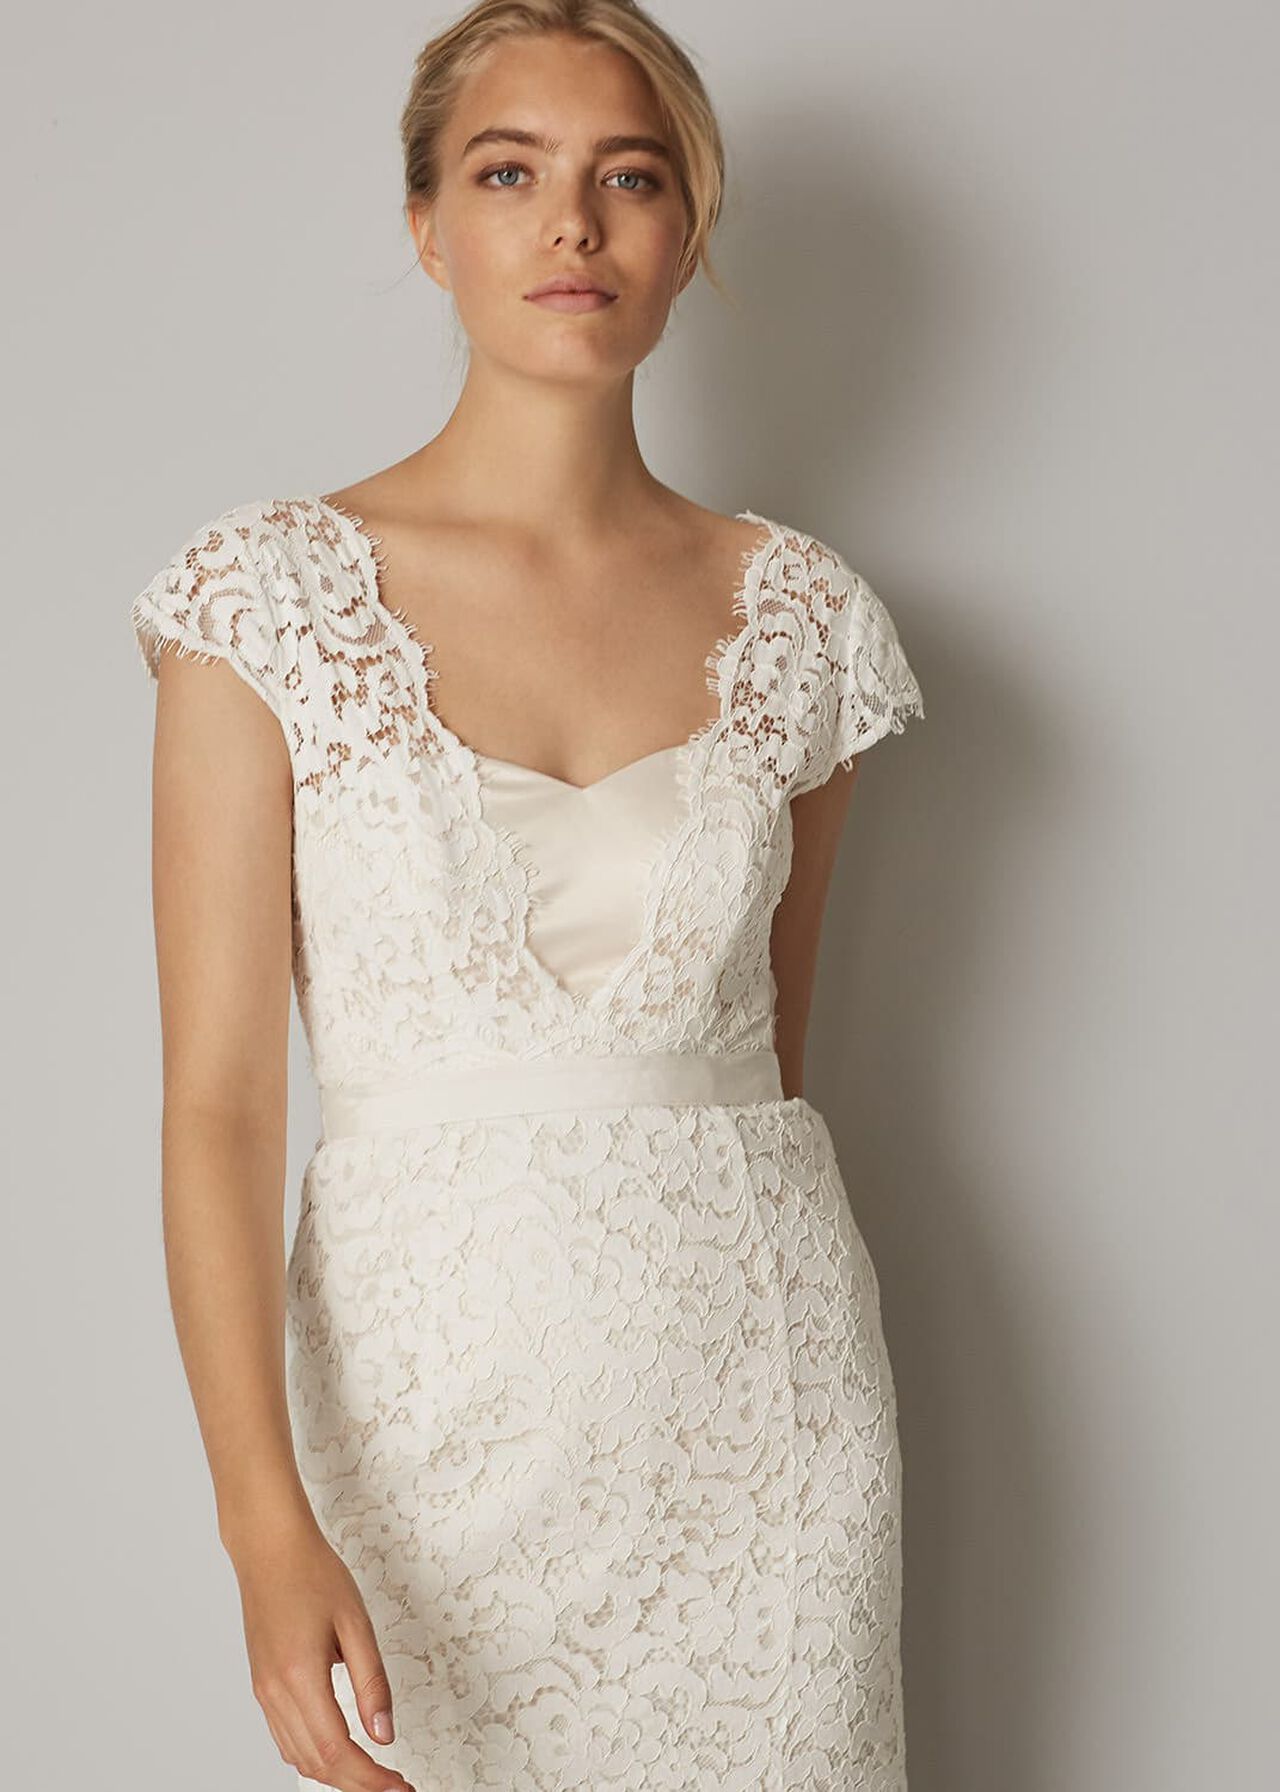 Maegen Lace Wedding Dress